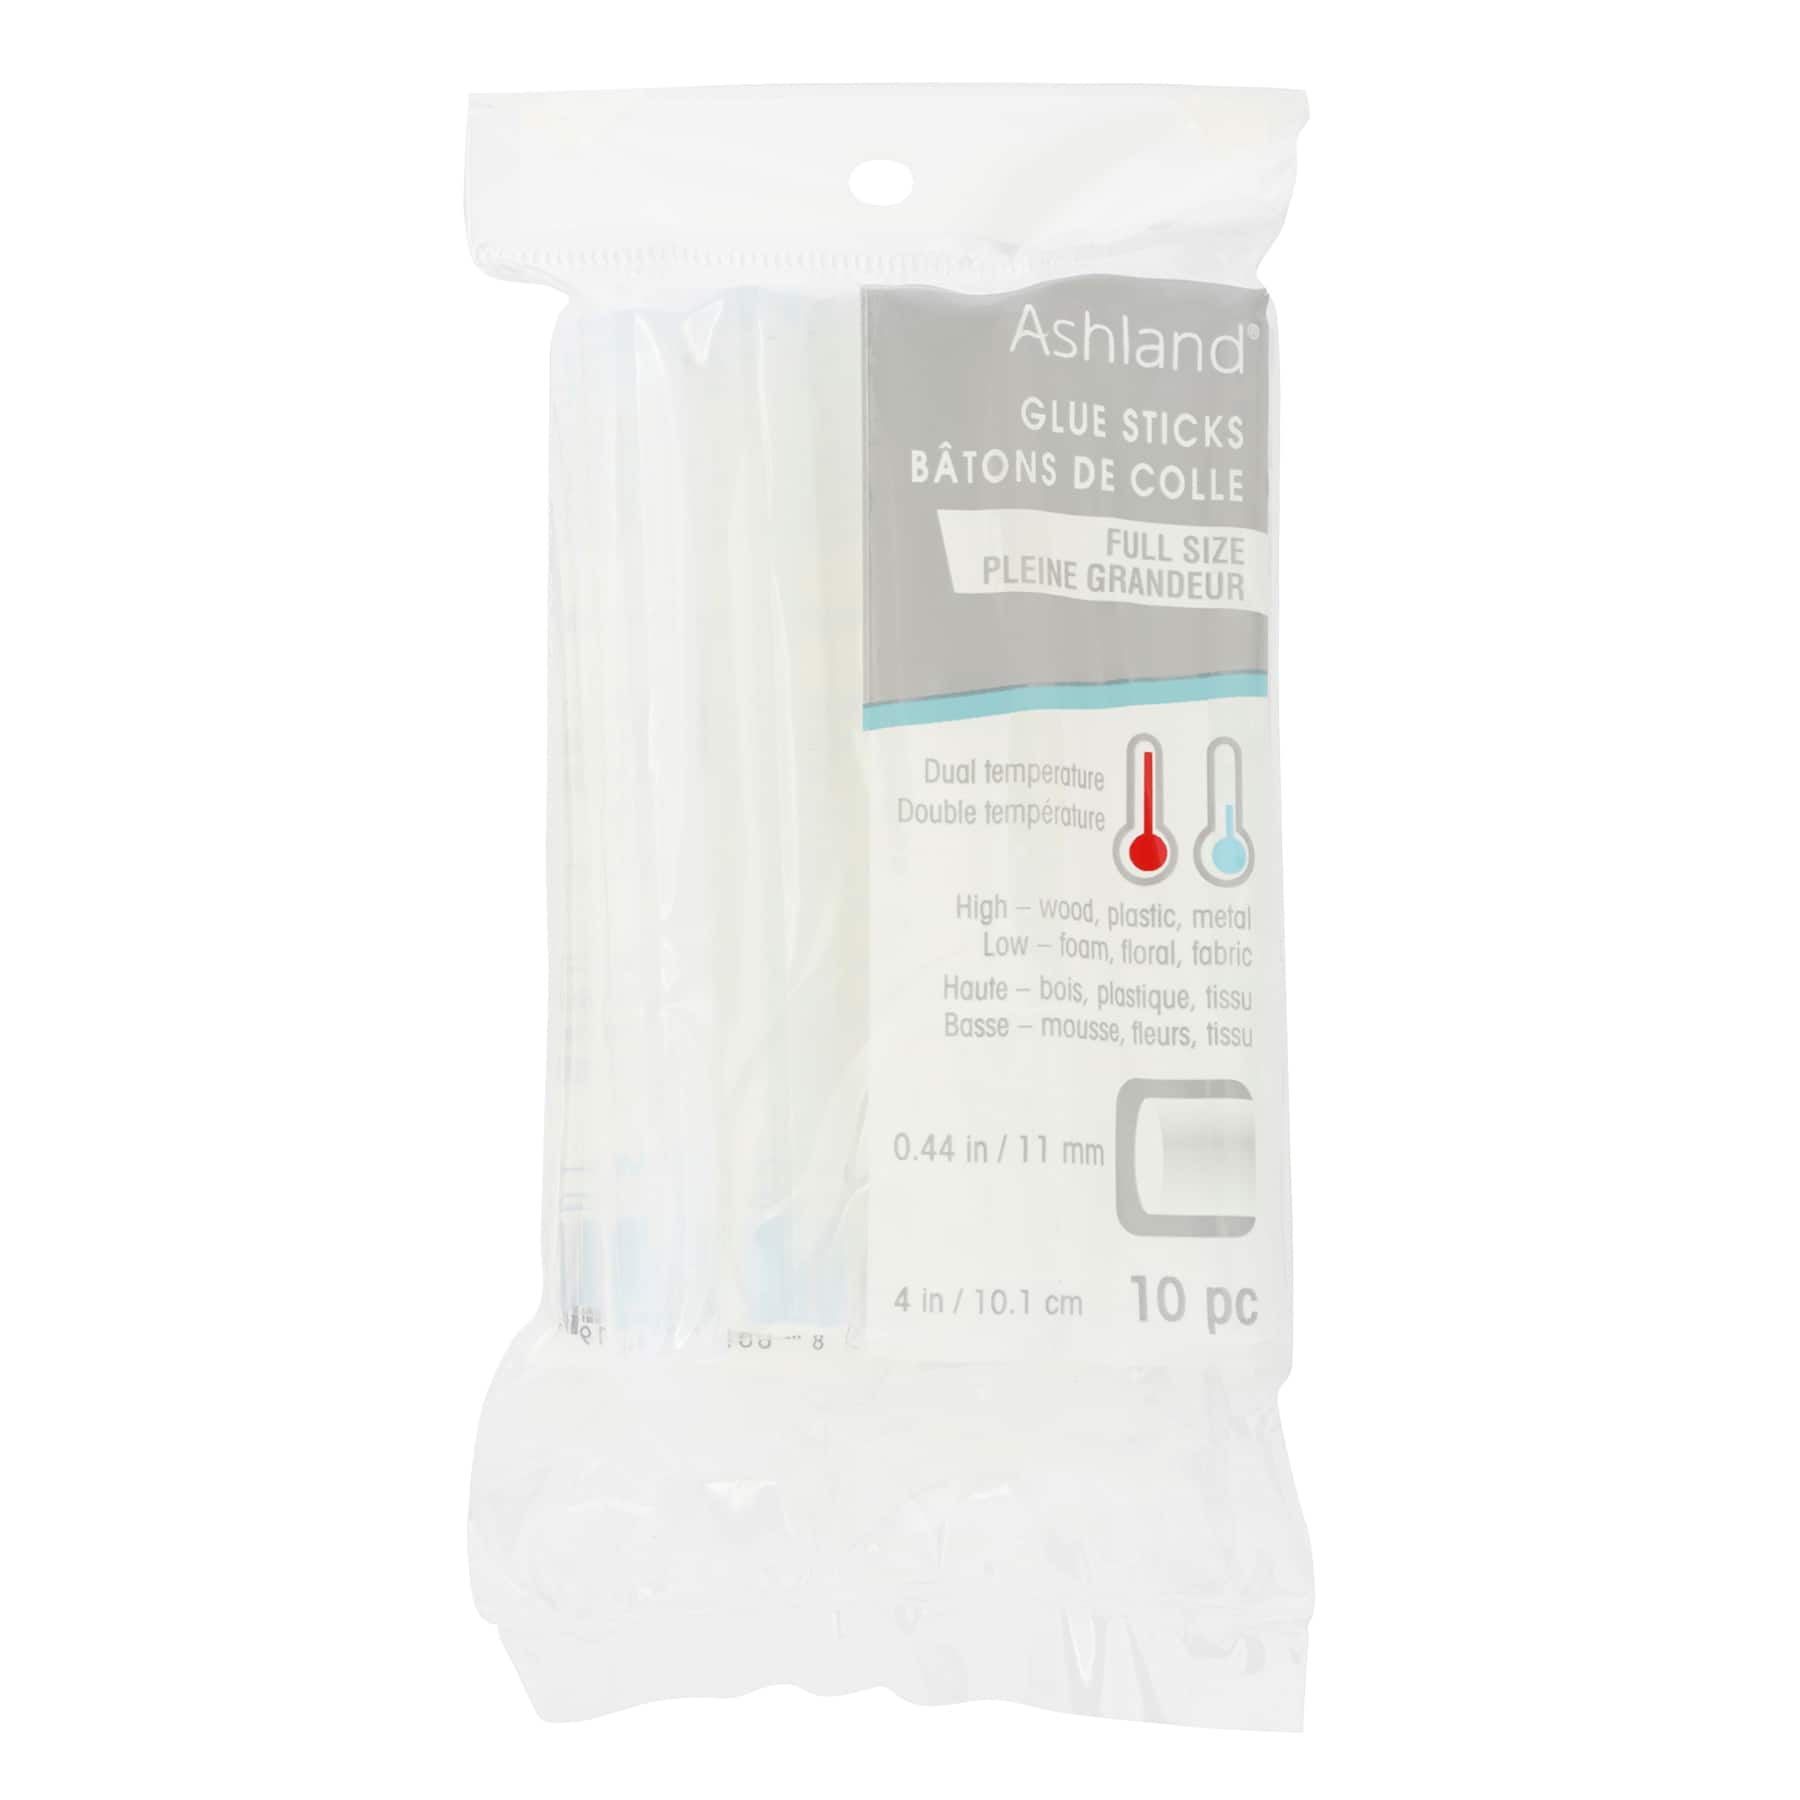 4 Full Size Dual Temperature Glue Sticks by Ashland®